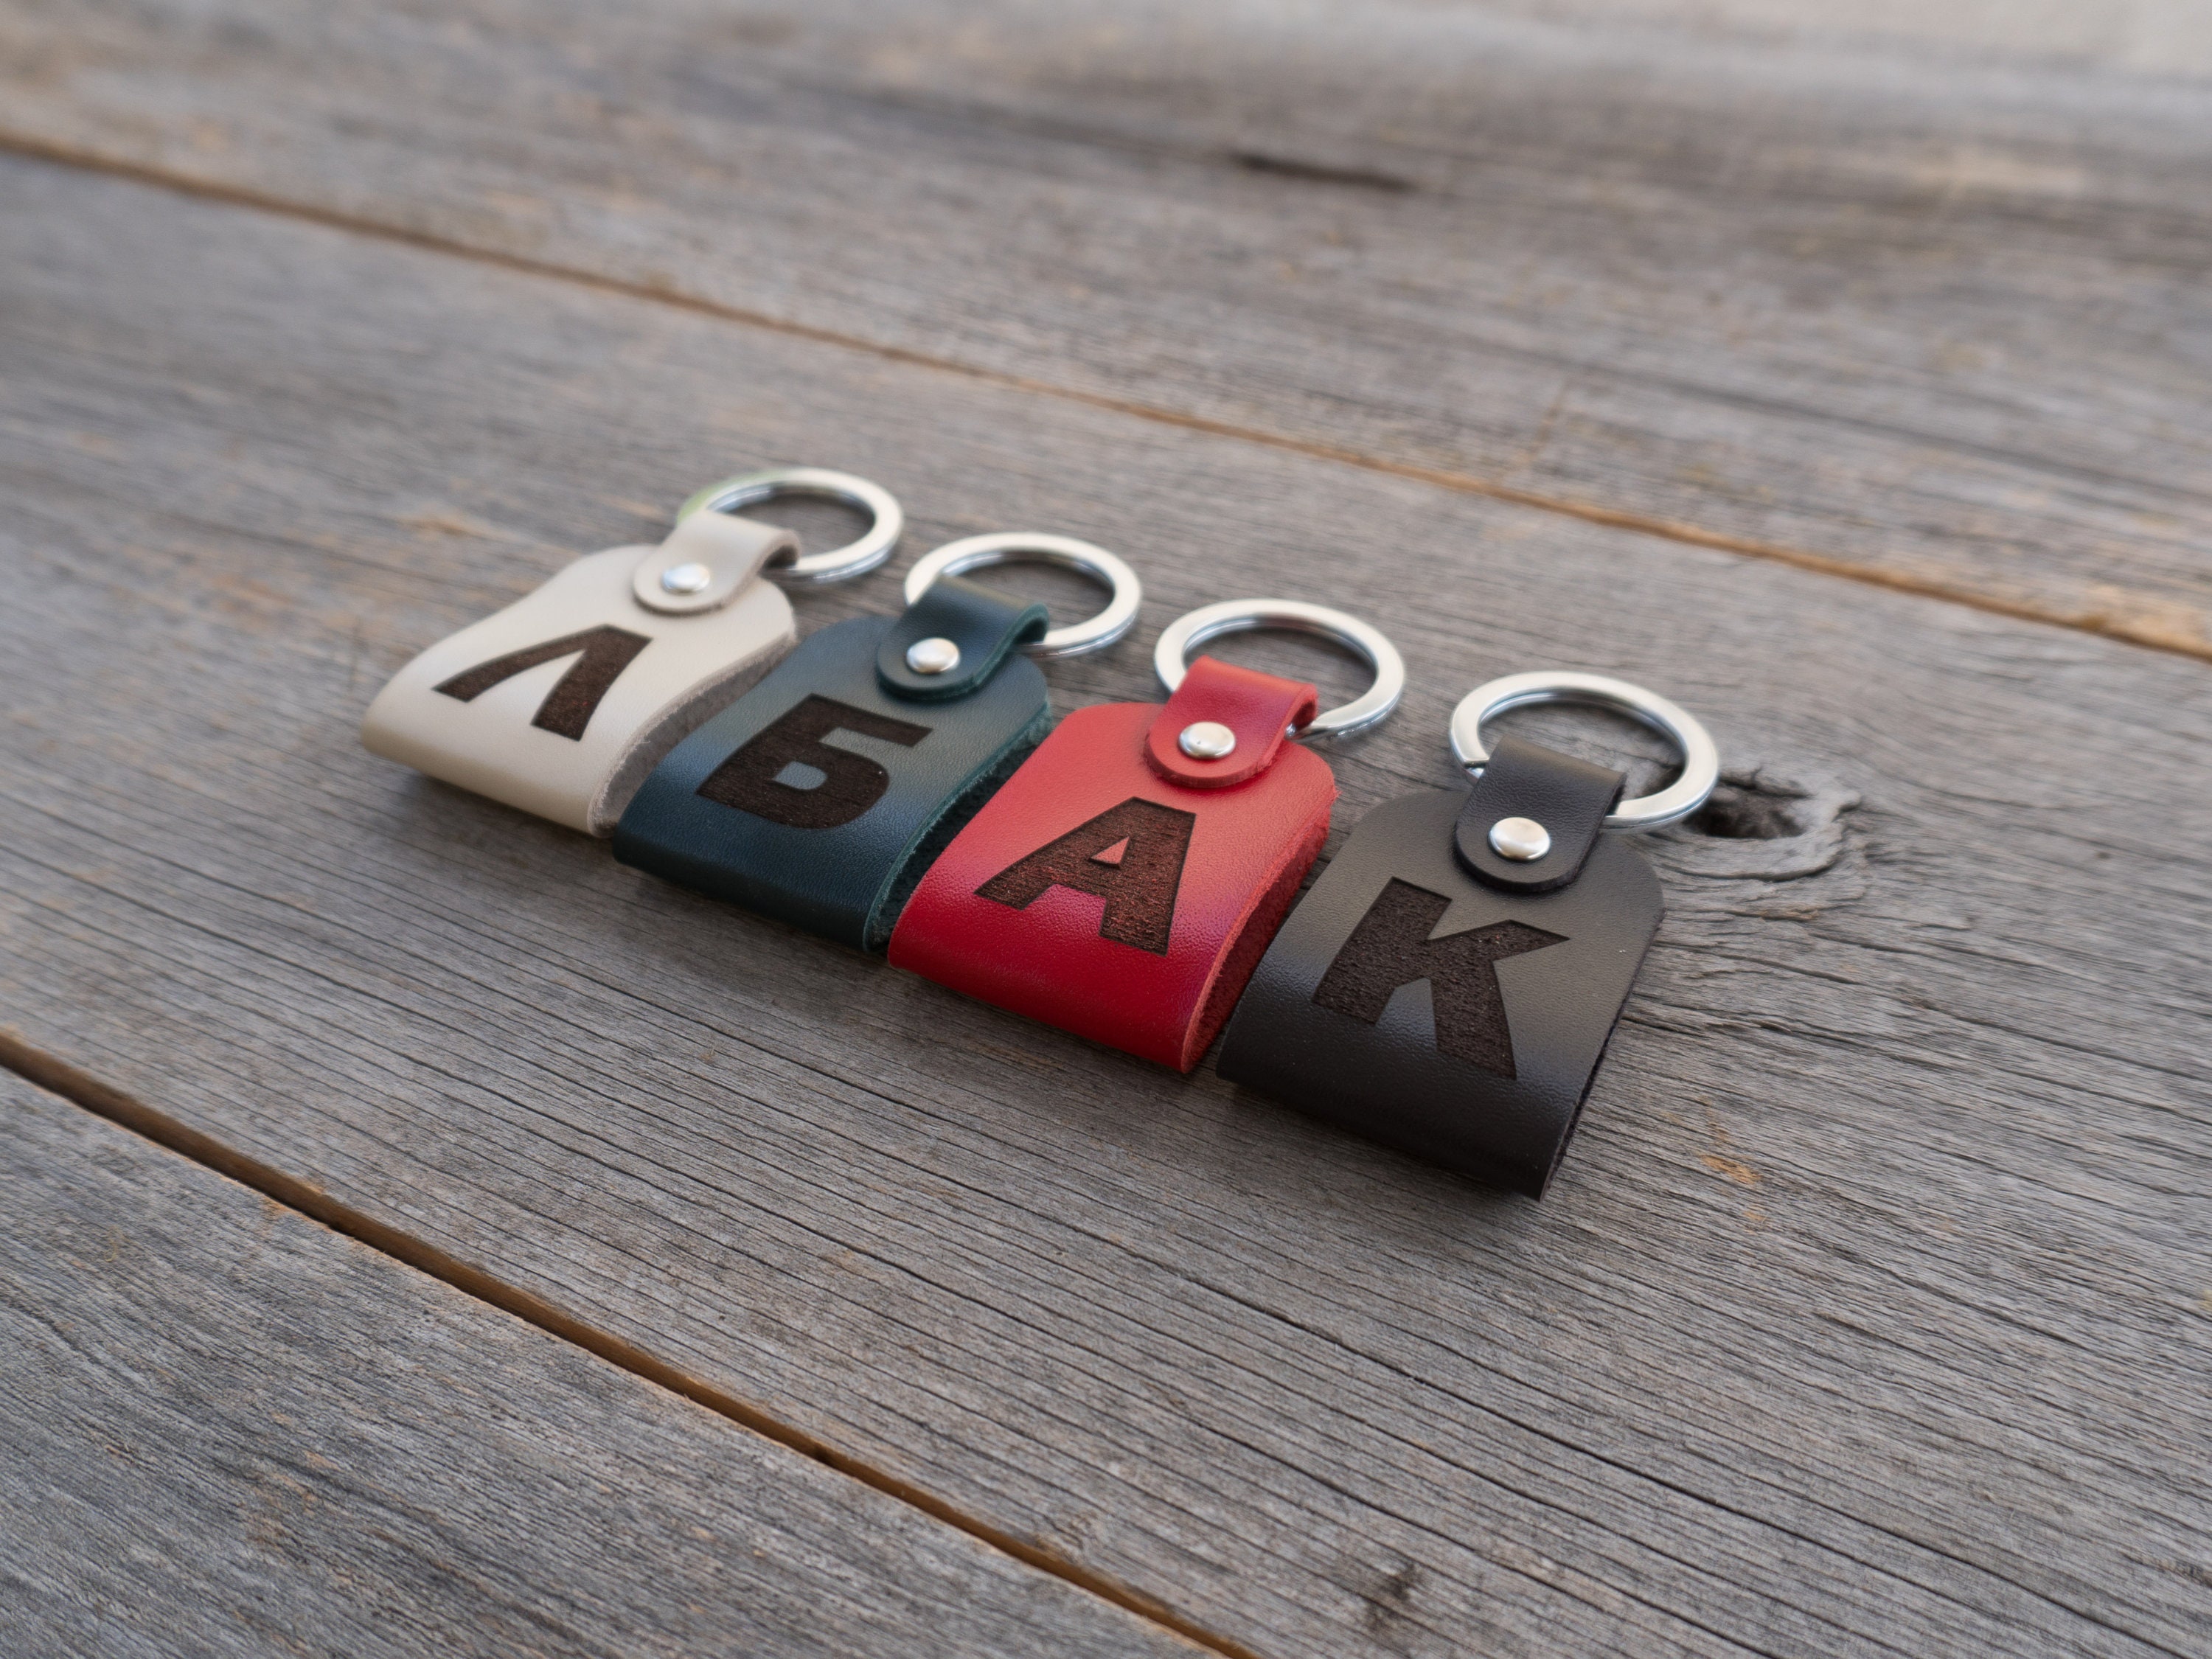 Brown Monogram Leather Keychain - Small Print